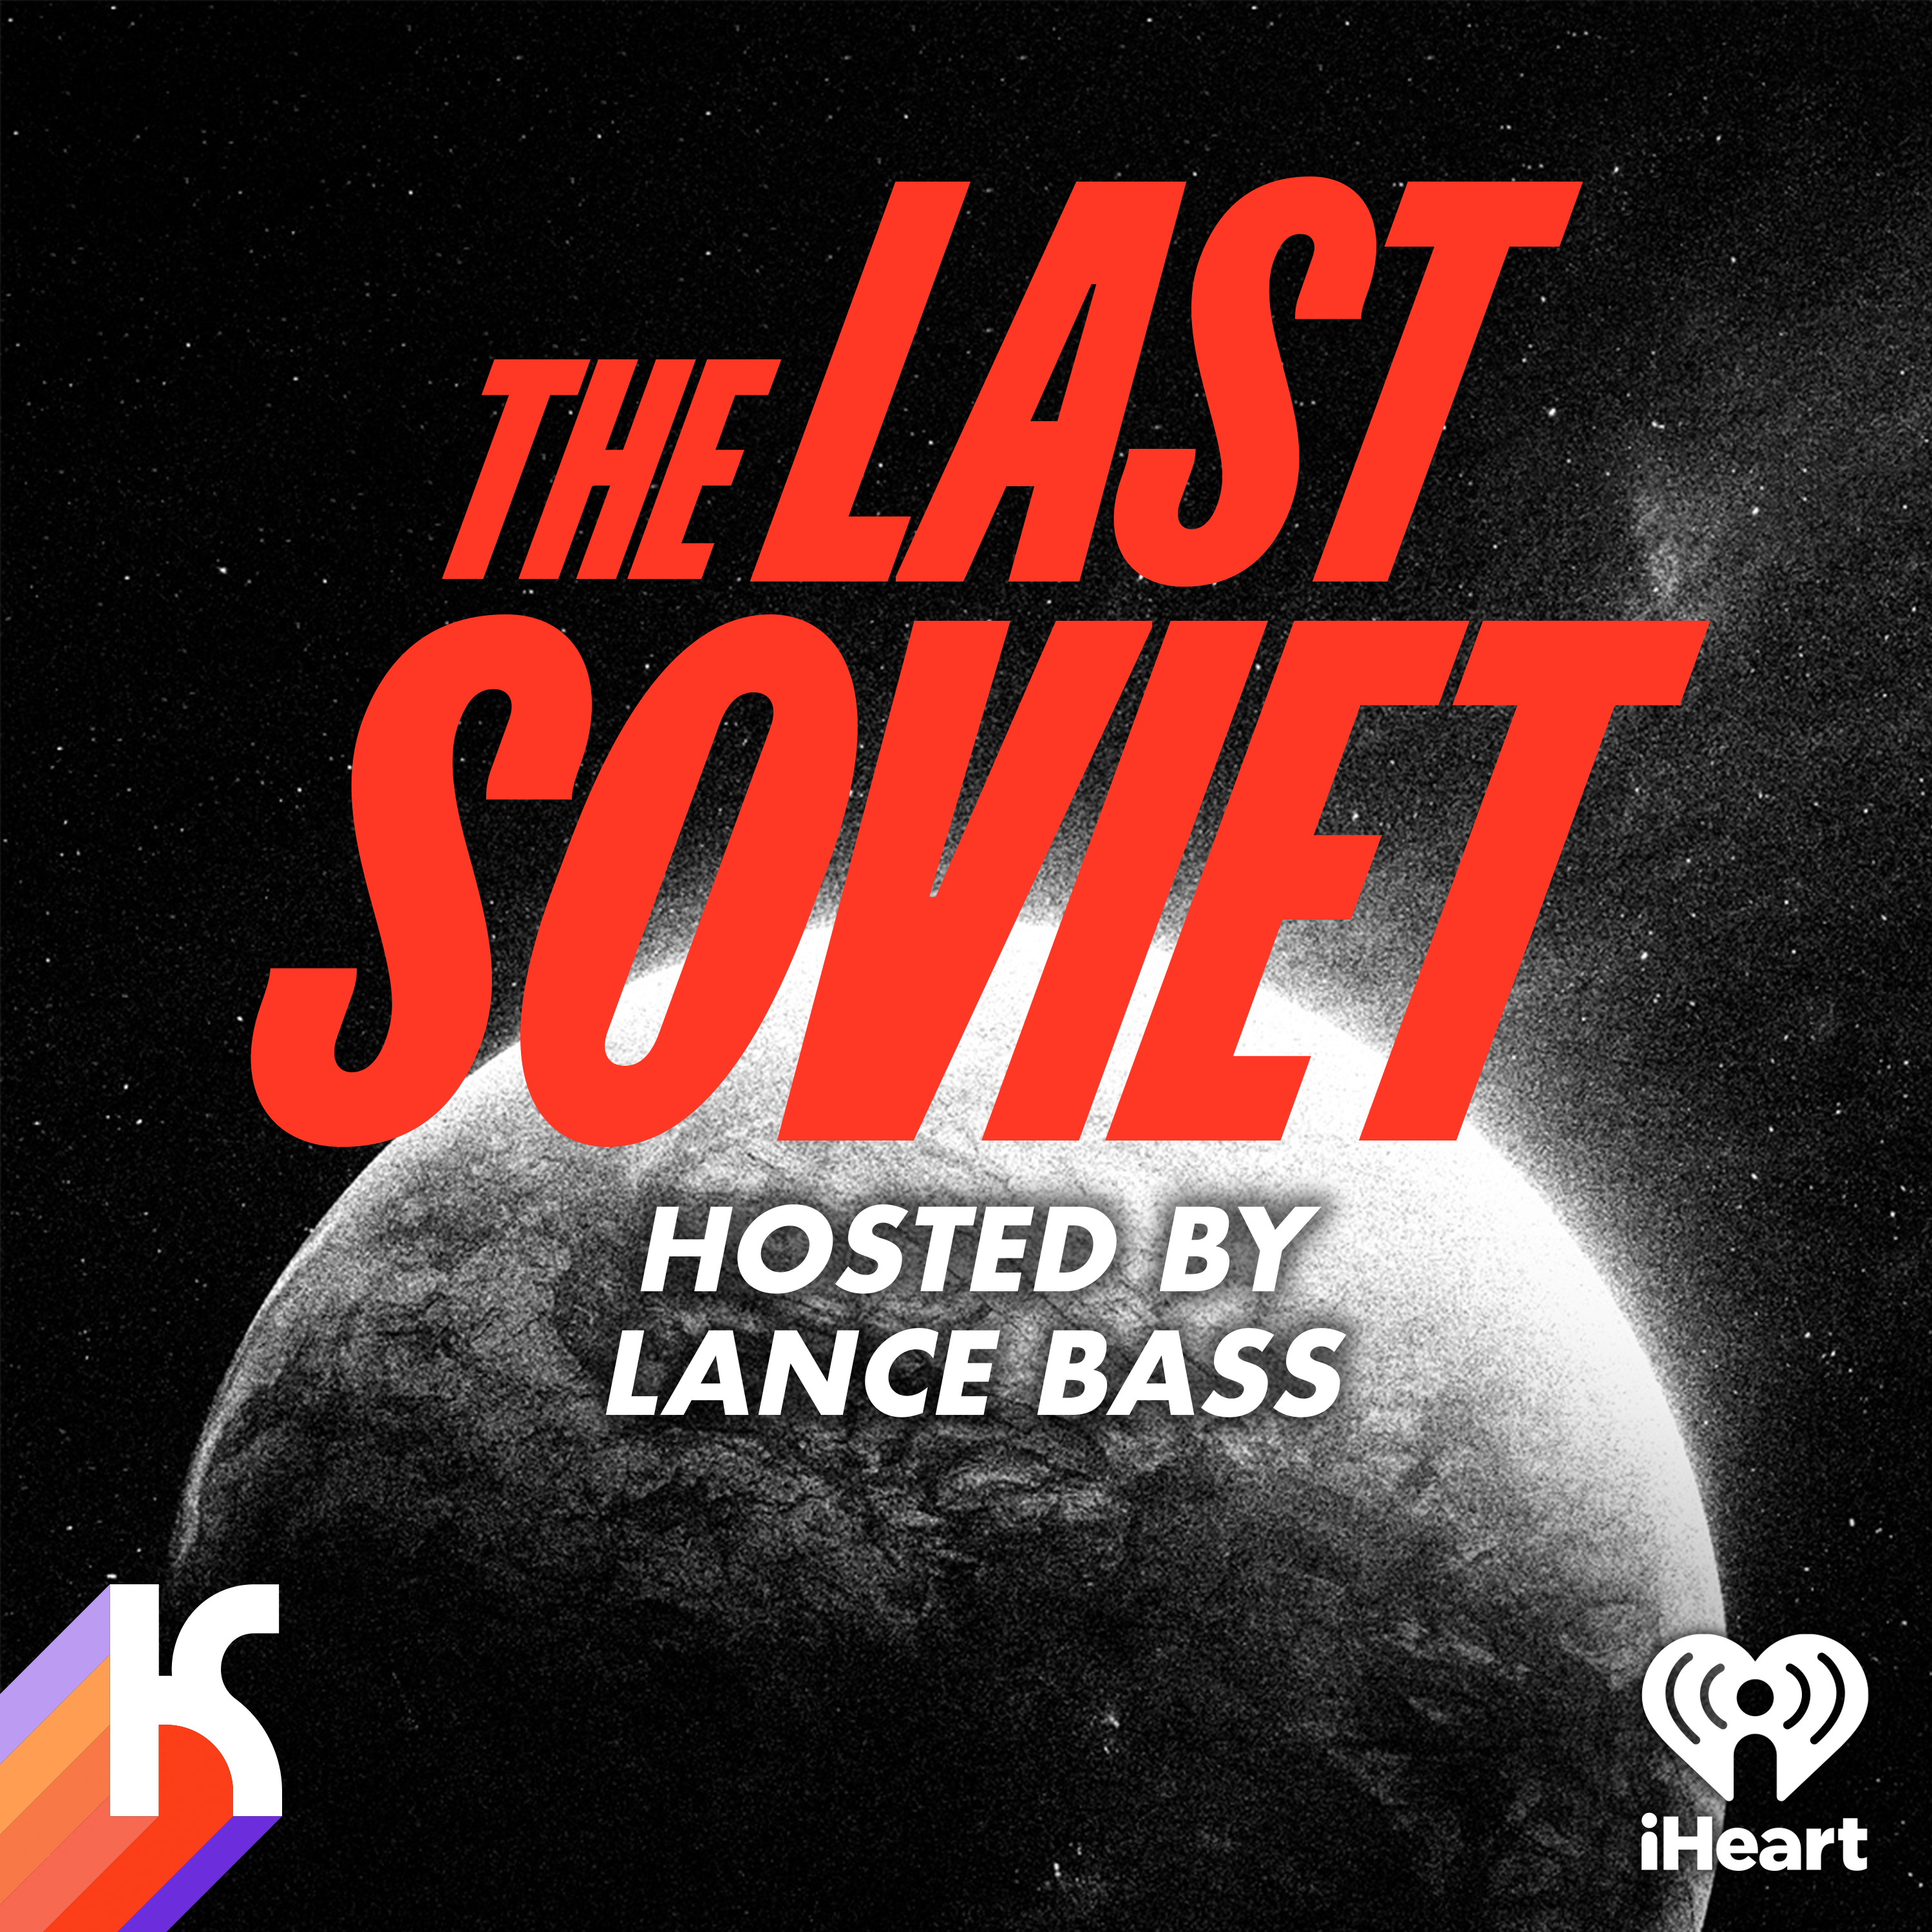 THE LAST SOVIET - The Lance Files